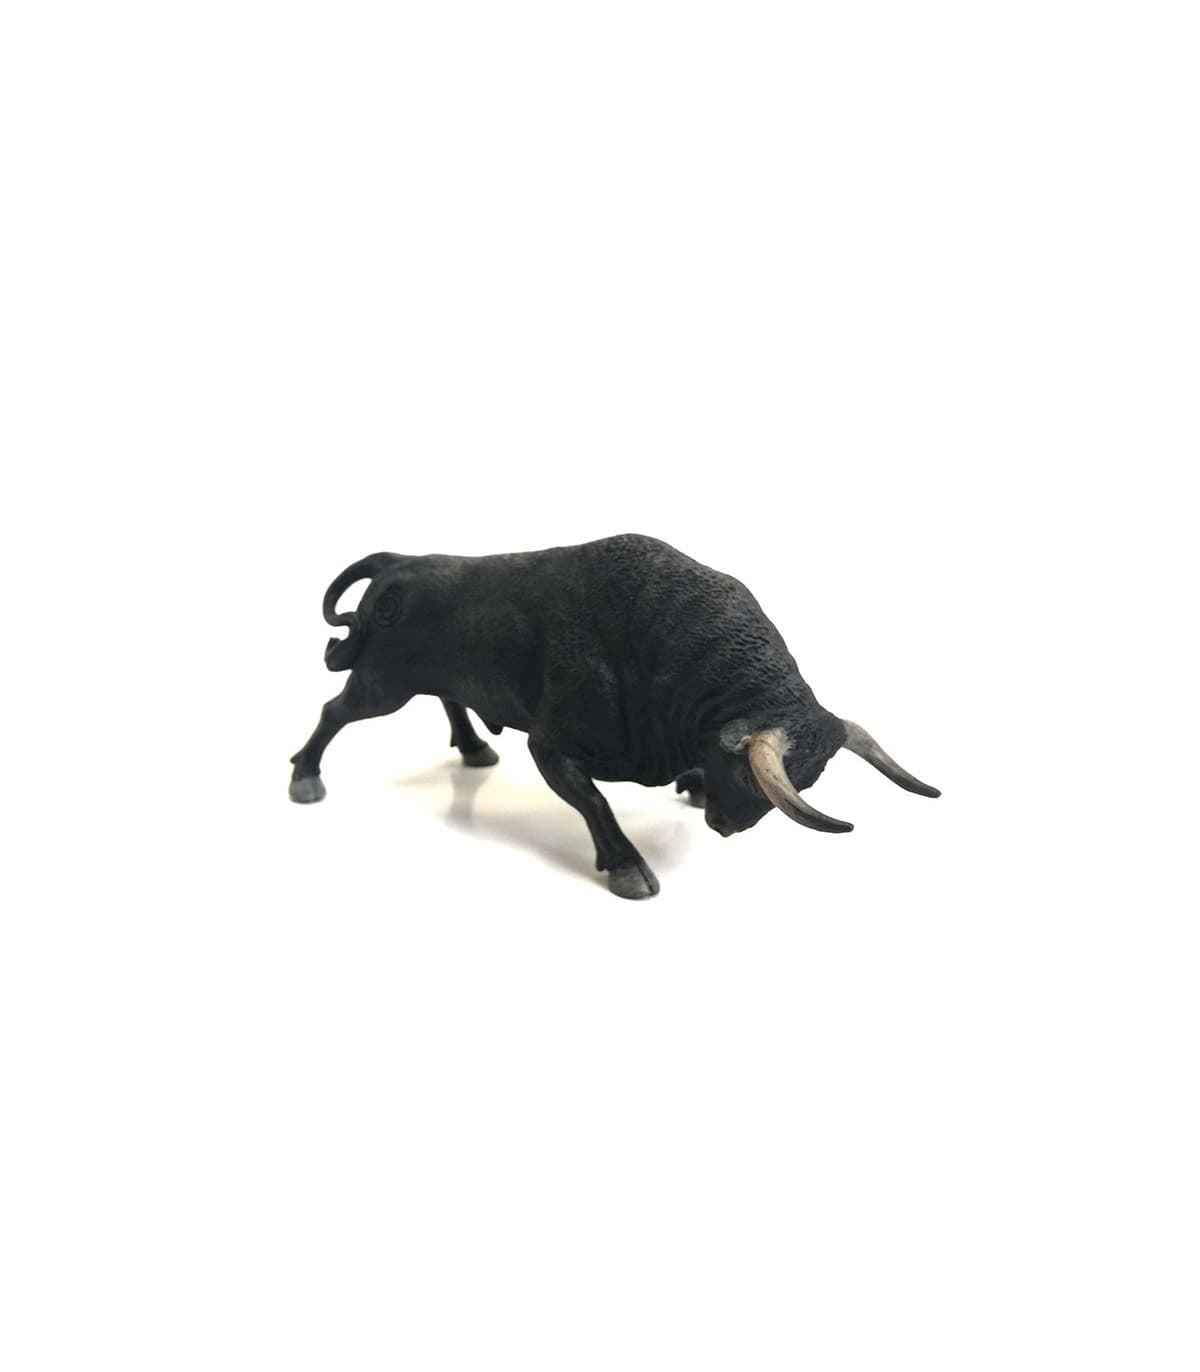 Toro bravo negro zaino embistiendo de juguete - Imagen 1